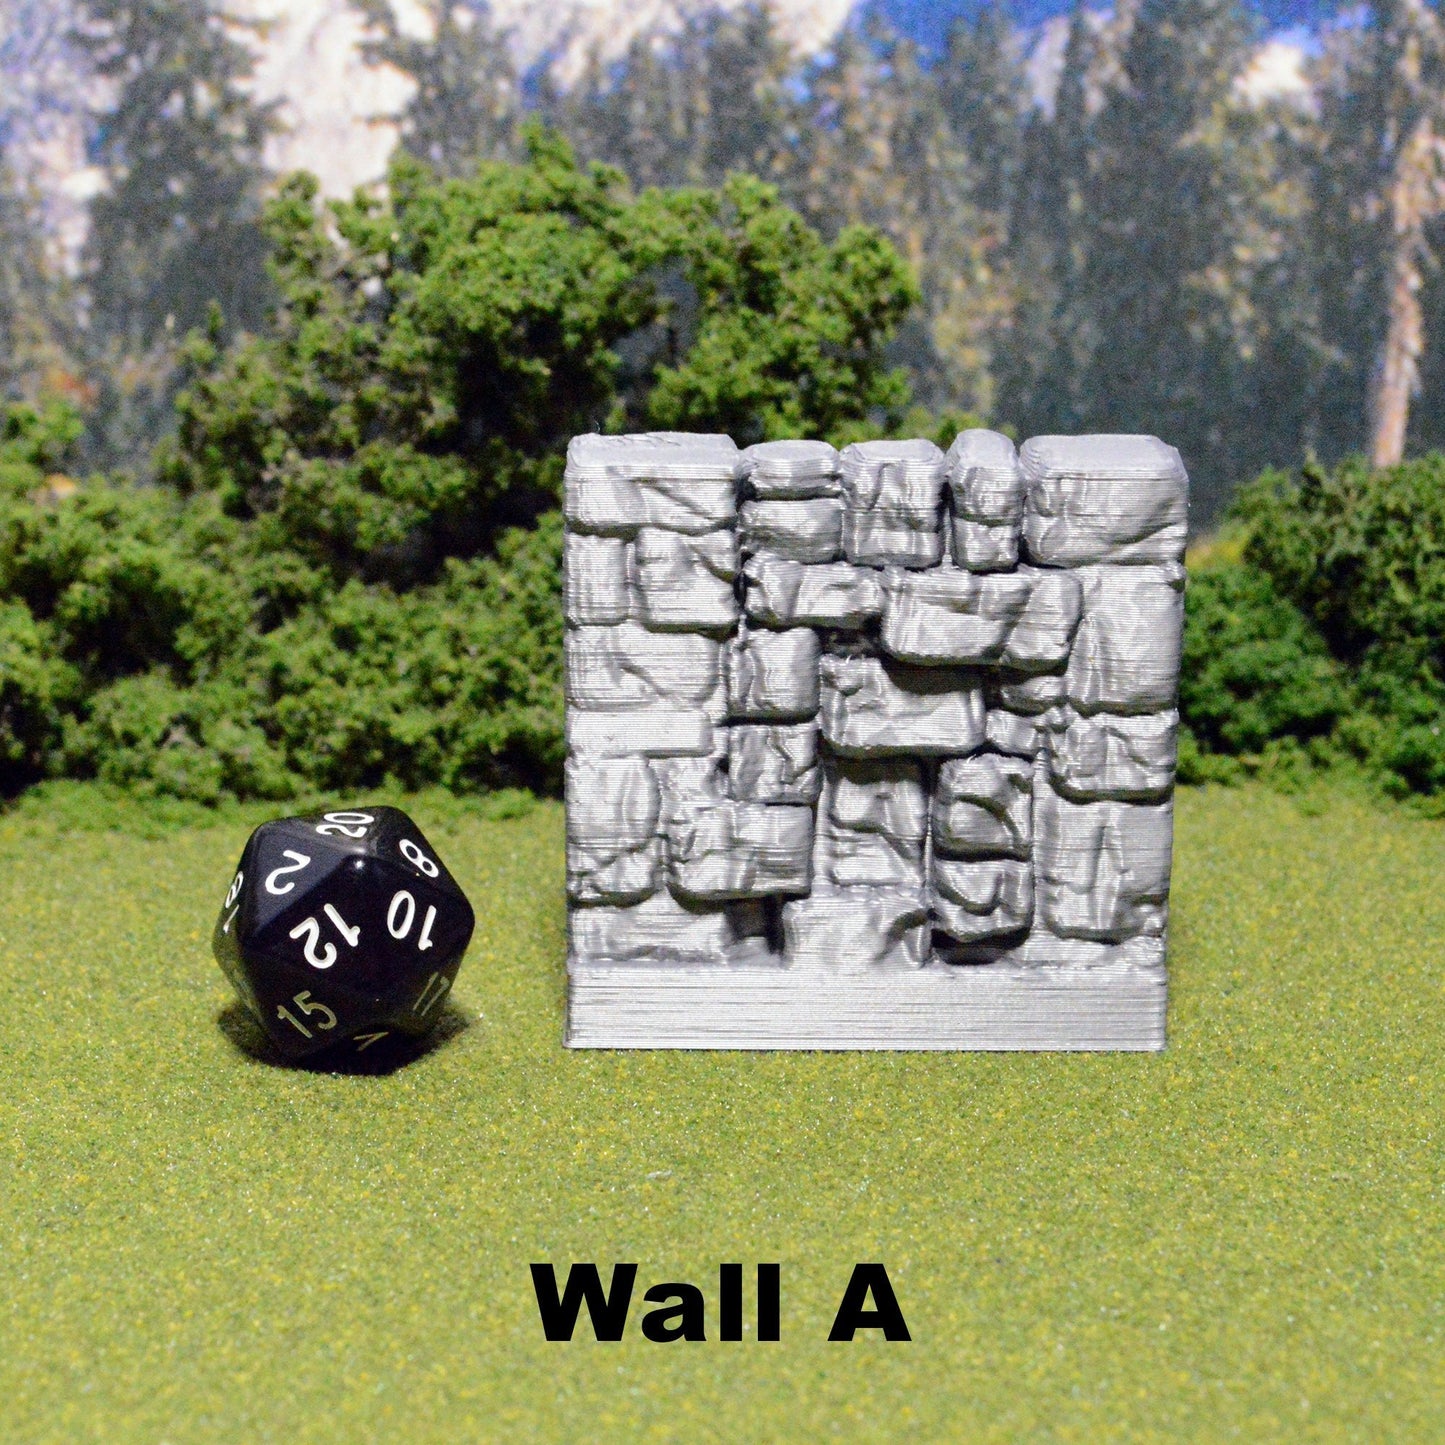 Heavy Stone Wall Tiles 28mm for D&D Terrain, Modular OpenLOCK Building Tiles, DnD Medieval Village Stone Wall Tiles